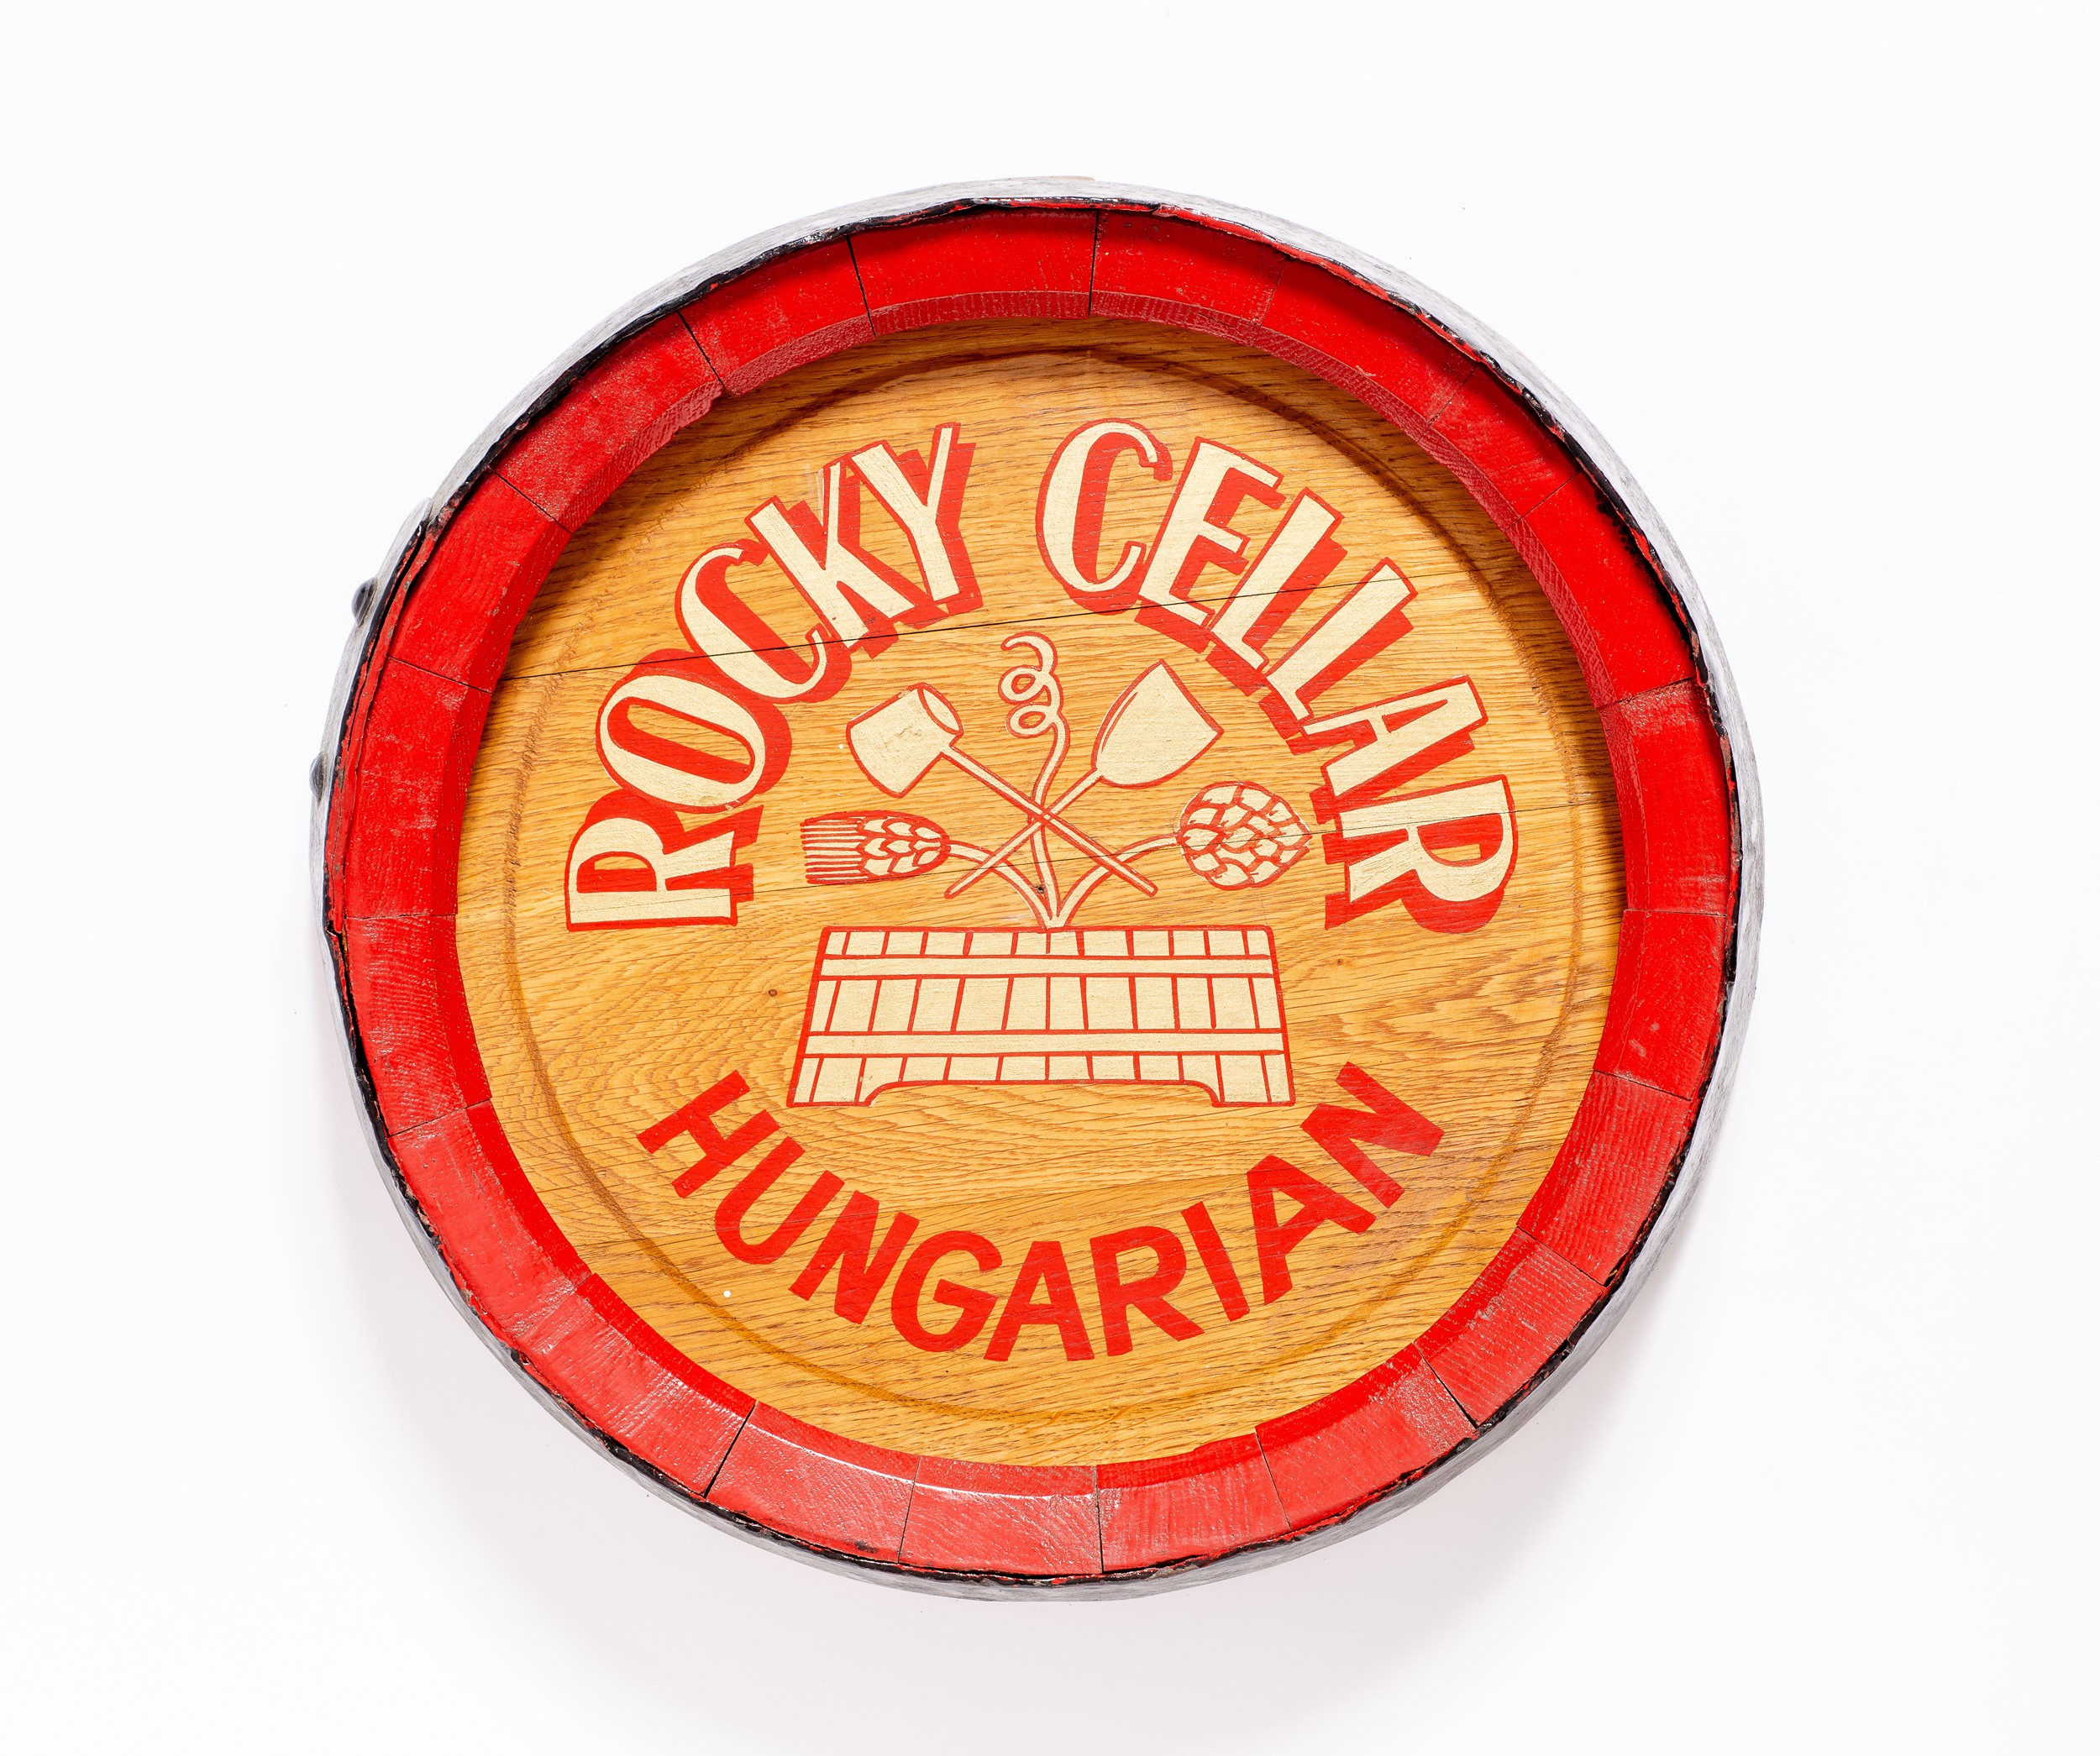 Fahordóvég:rocky cellár hungarian (Söripari Emléktár - Dreher Sörmúzeum CC BY-NC-SA)